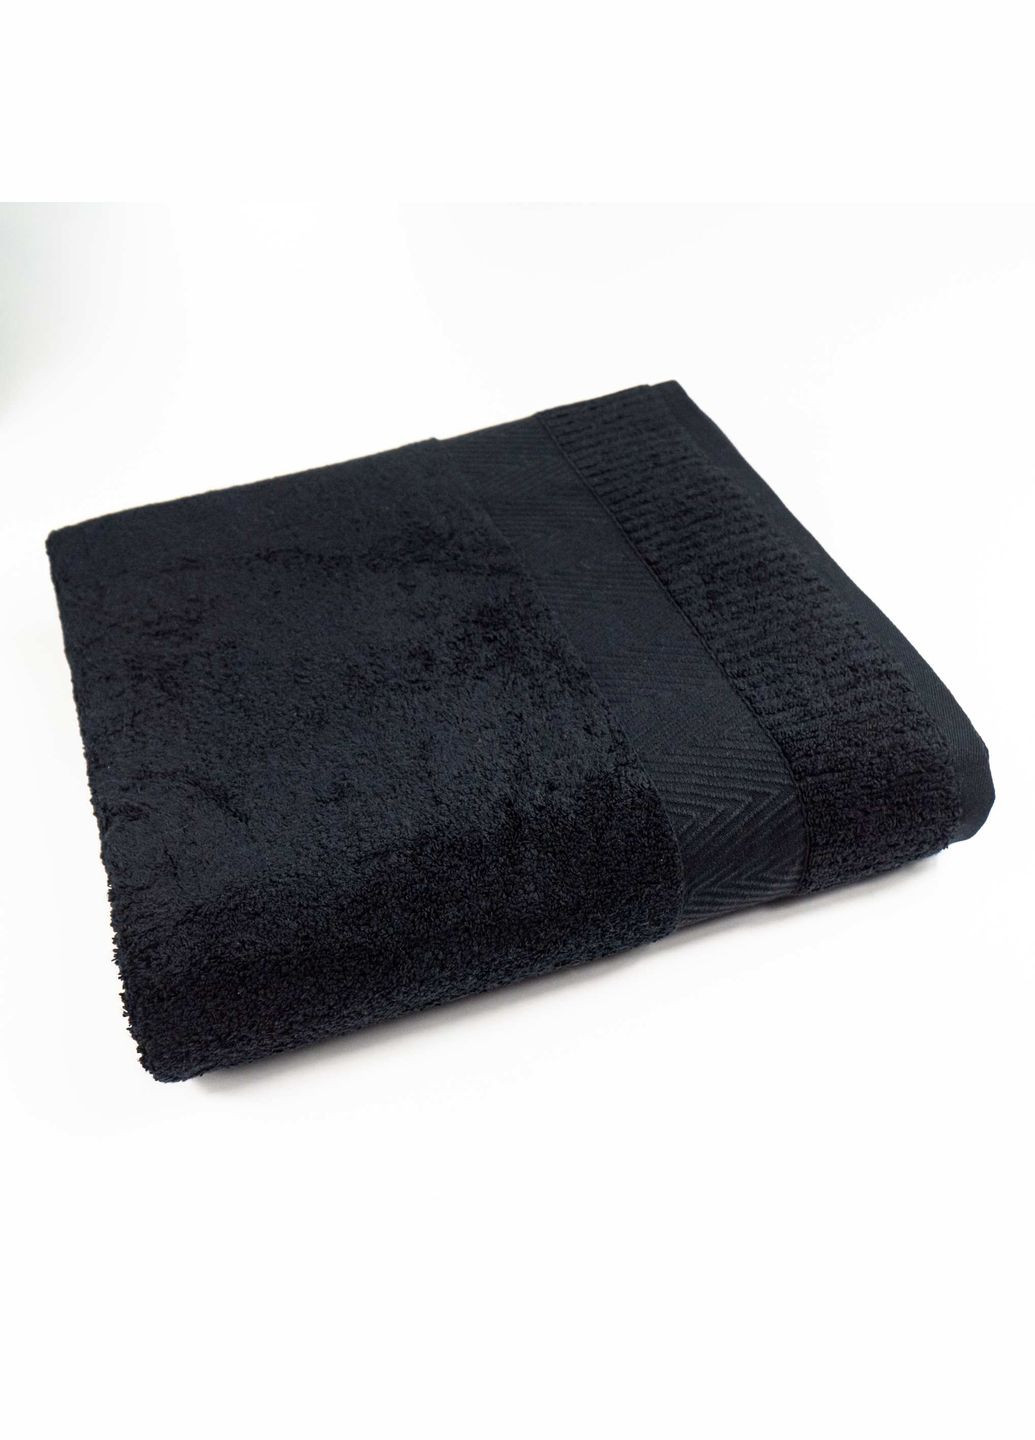 GM Textile набор махровых полотенец зеро твист бордюр 3шт 50x90см, 50x90см, 70x140см 550г/м2 () черный производство -